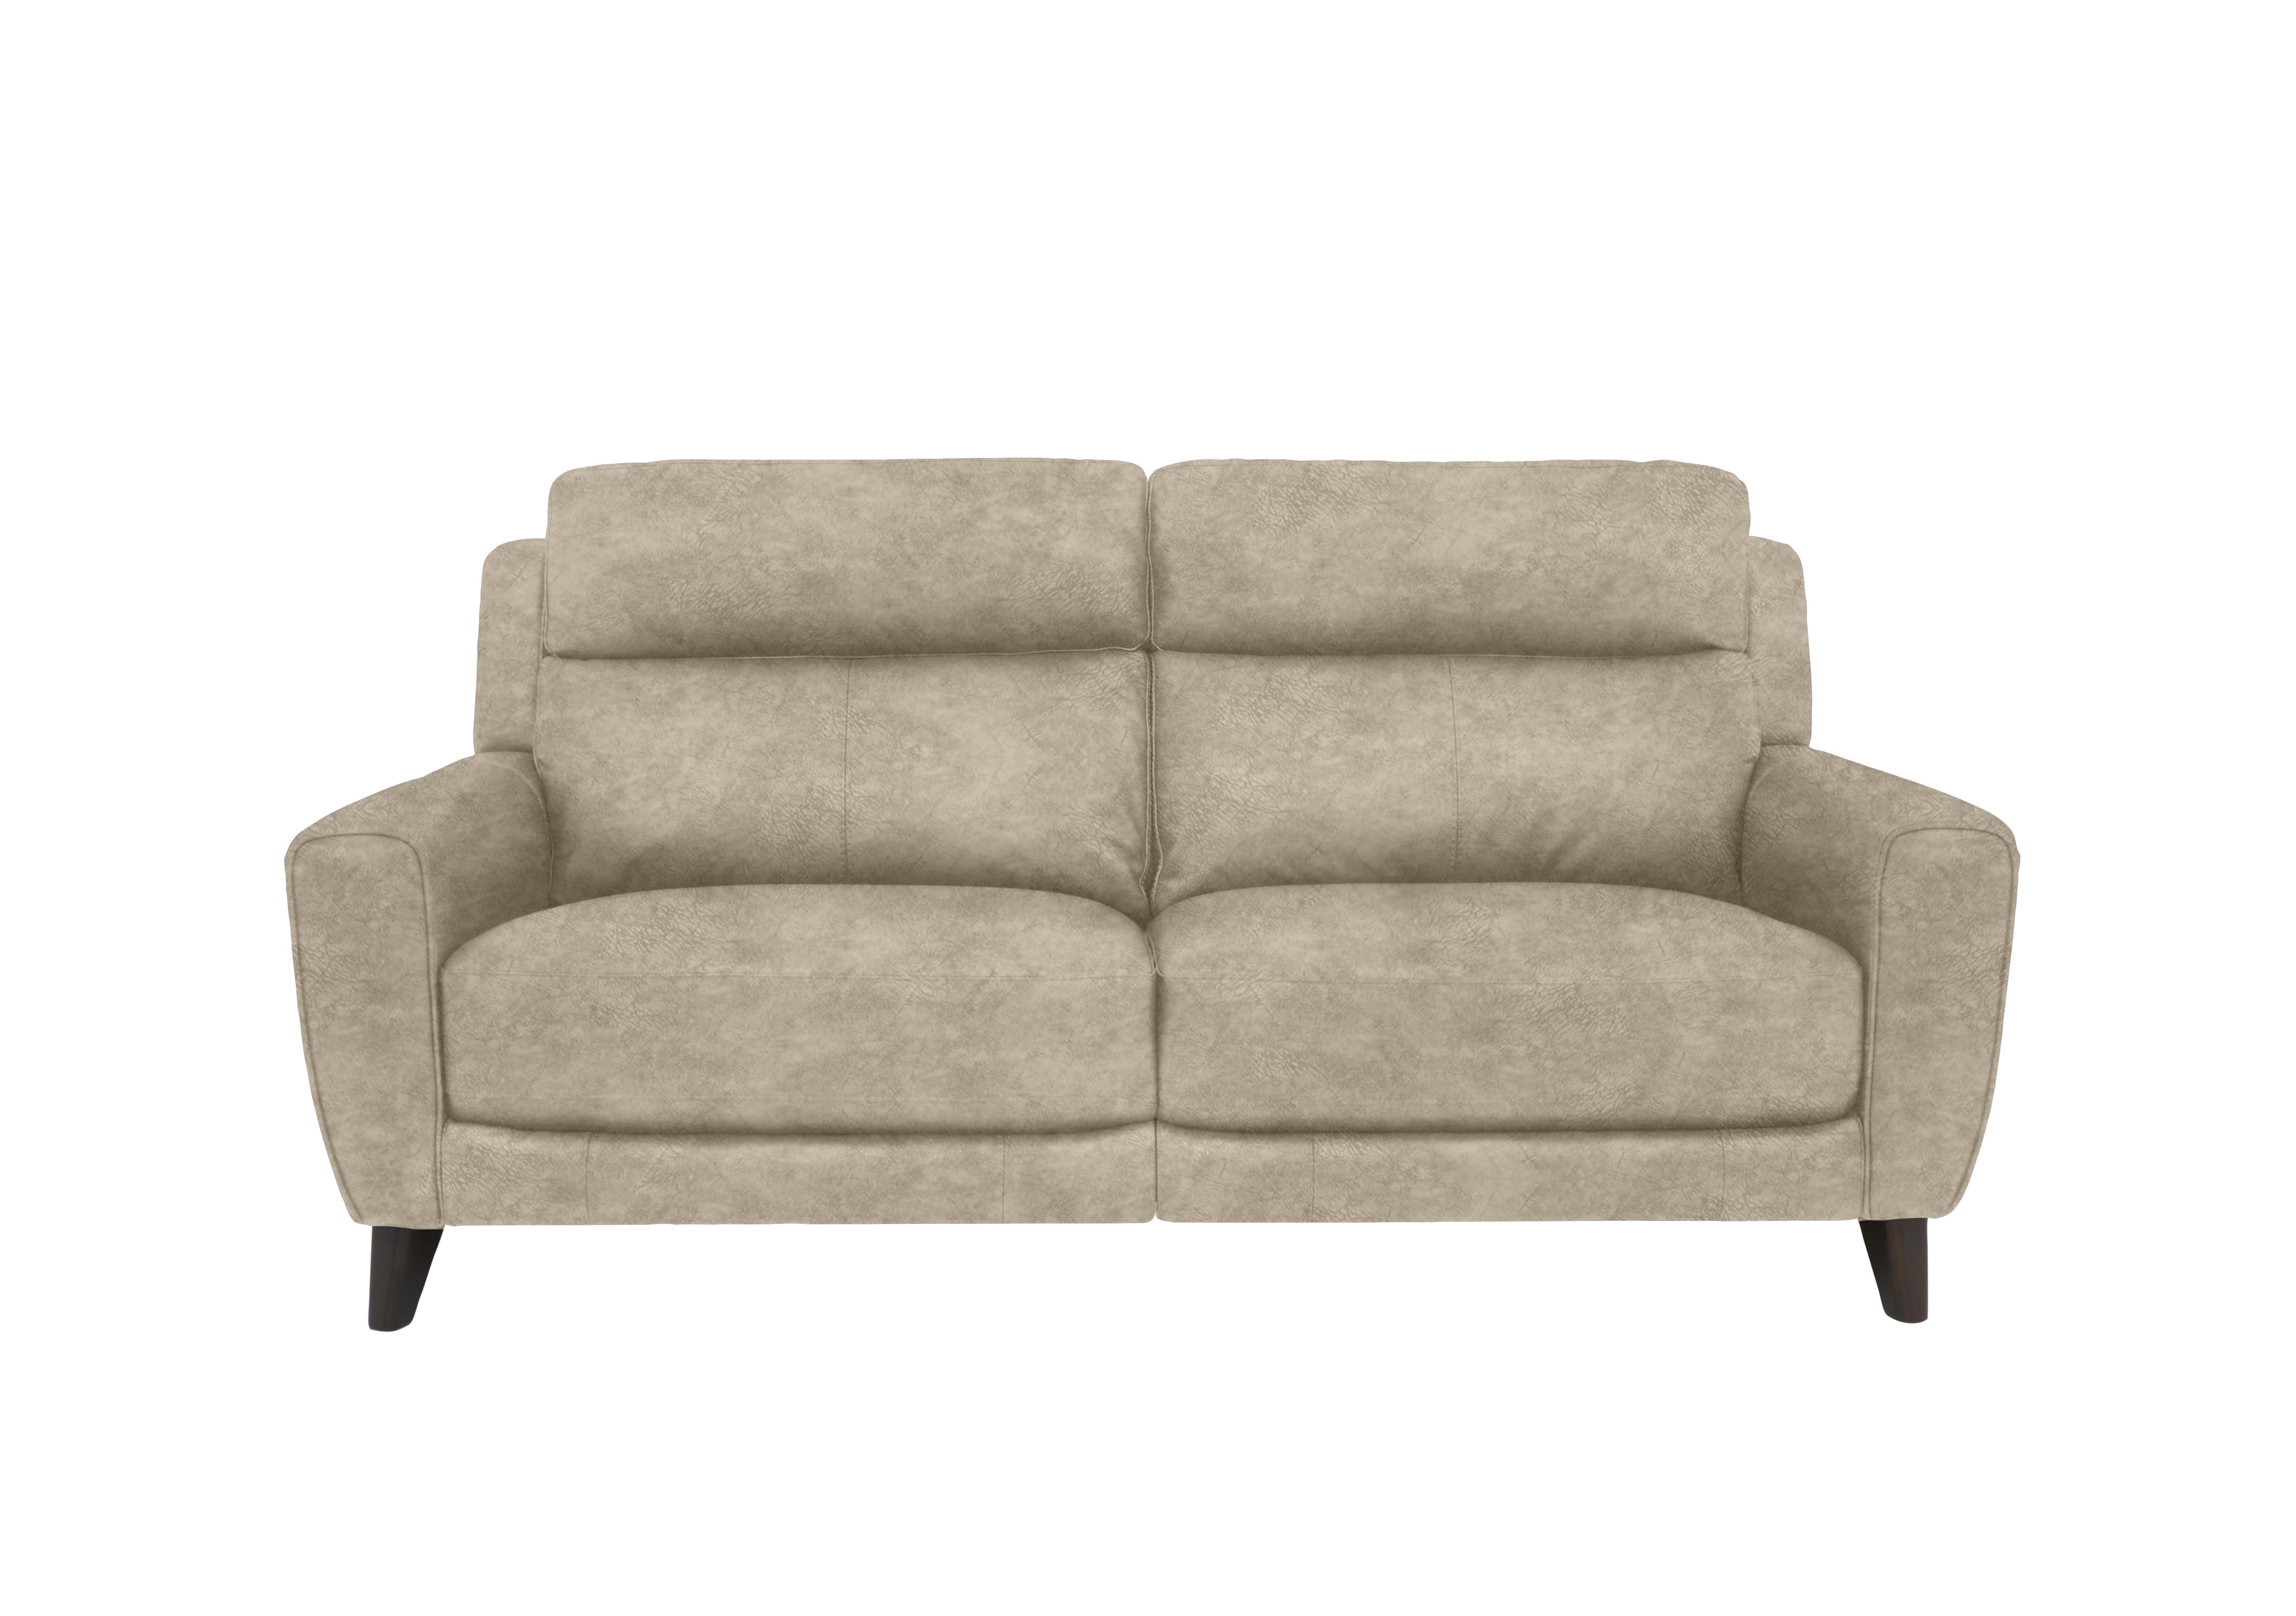 Zen 3 Seater Fabric Power Recliner Sofa with Power Headrests in Bfa-Bnn-R26 Cream on Furniture Village